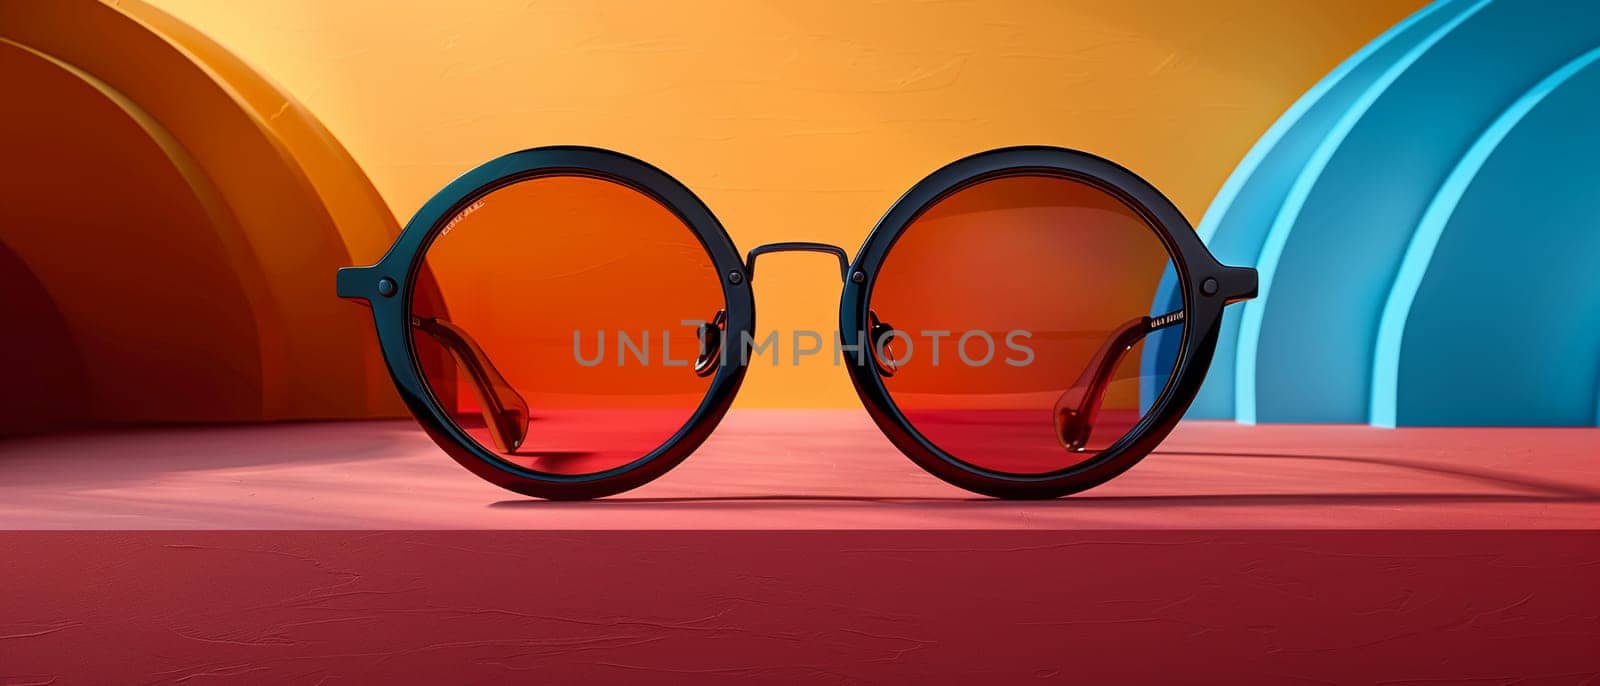 Minimal Sunglasses Mockup by Benzoix